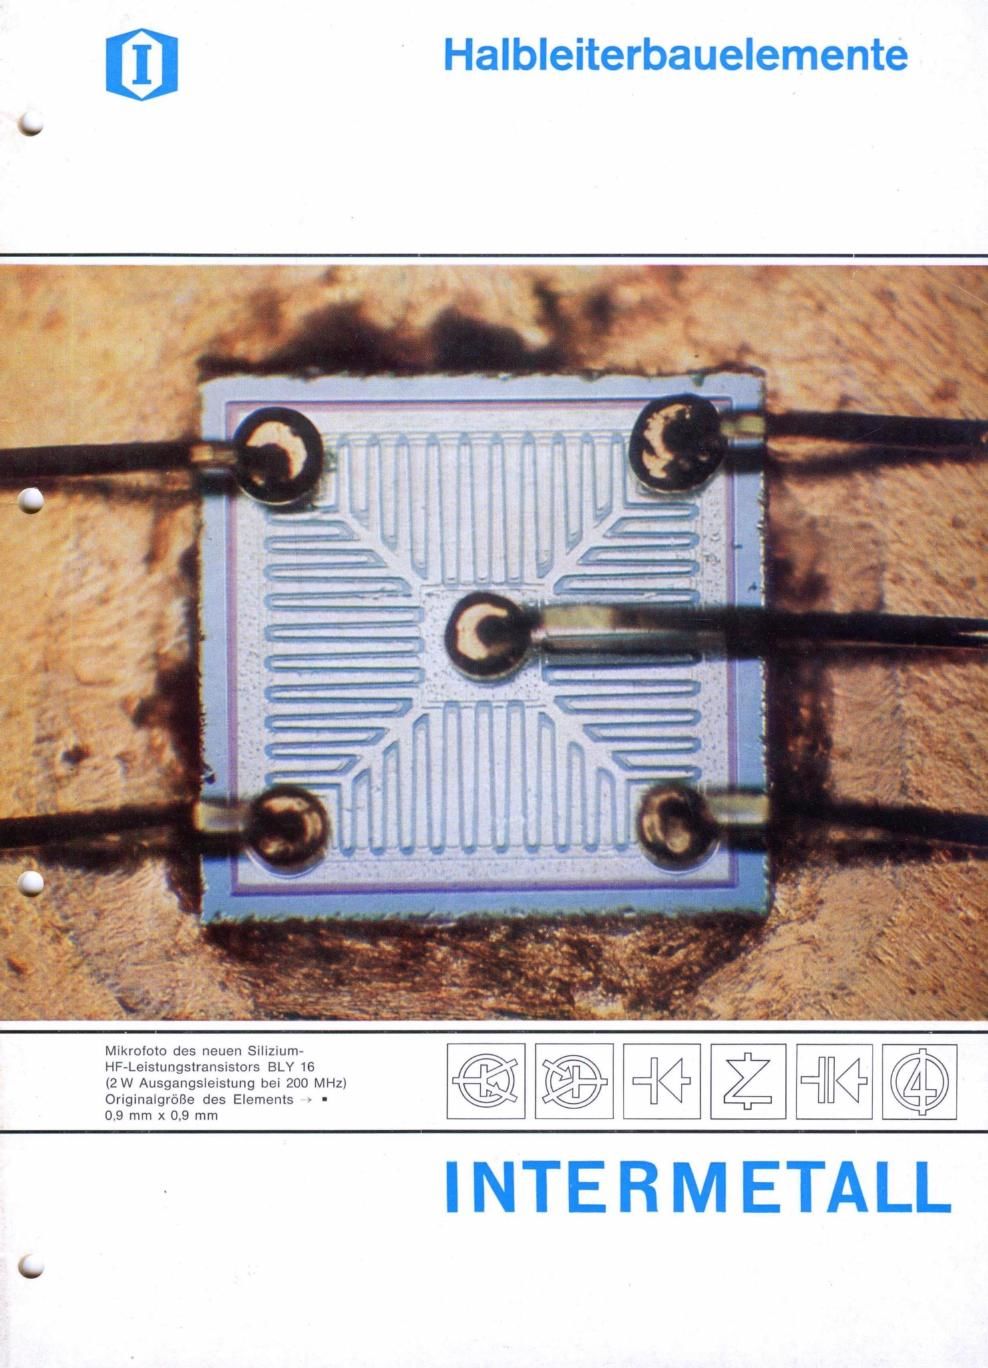 ITT 1965 Intermetall Halbleiter Bauelemente